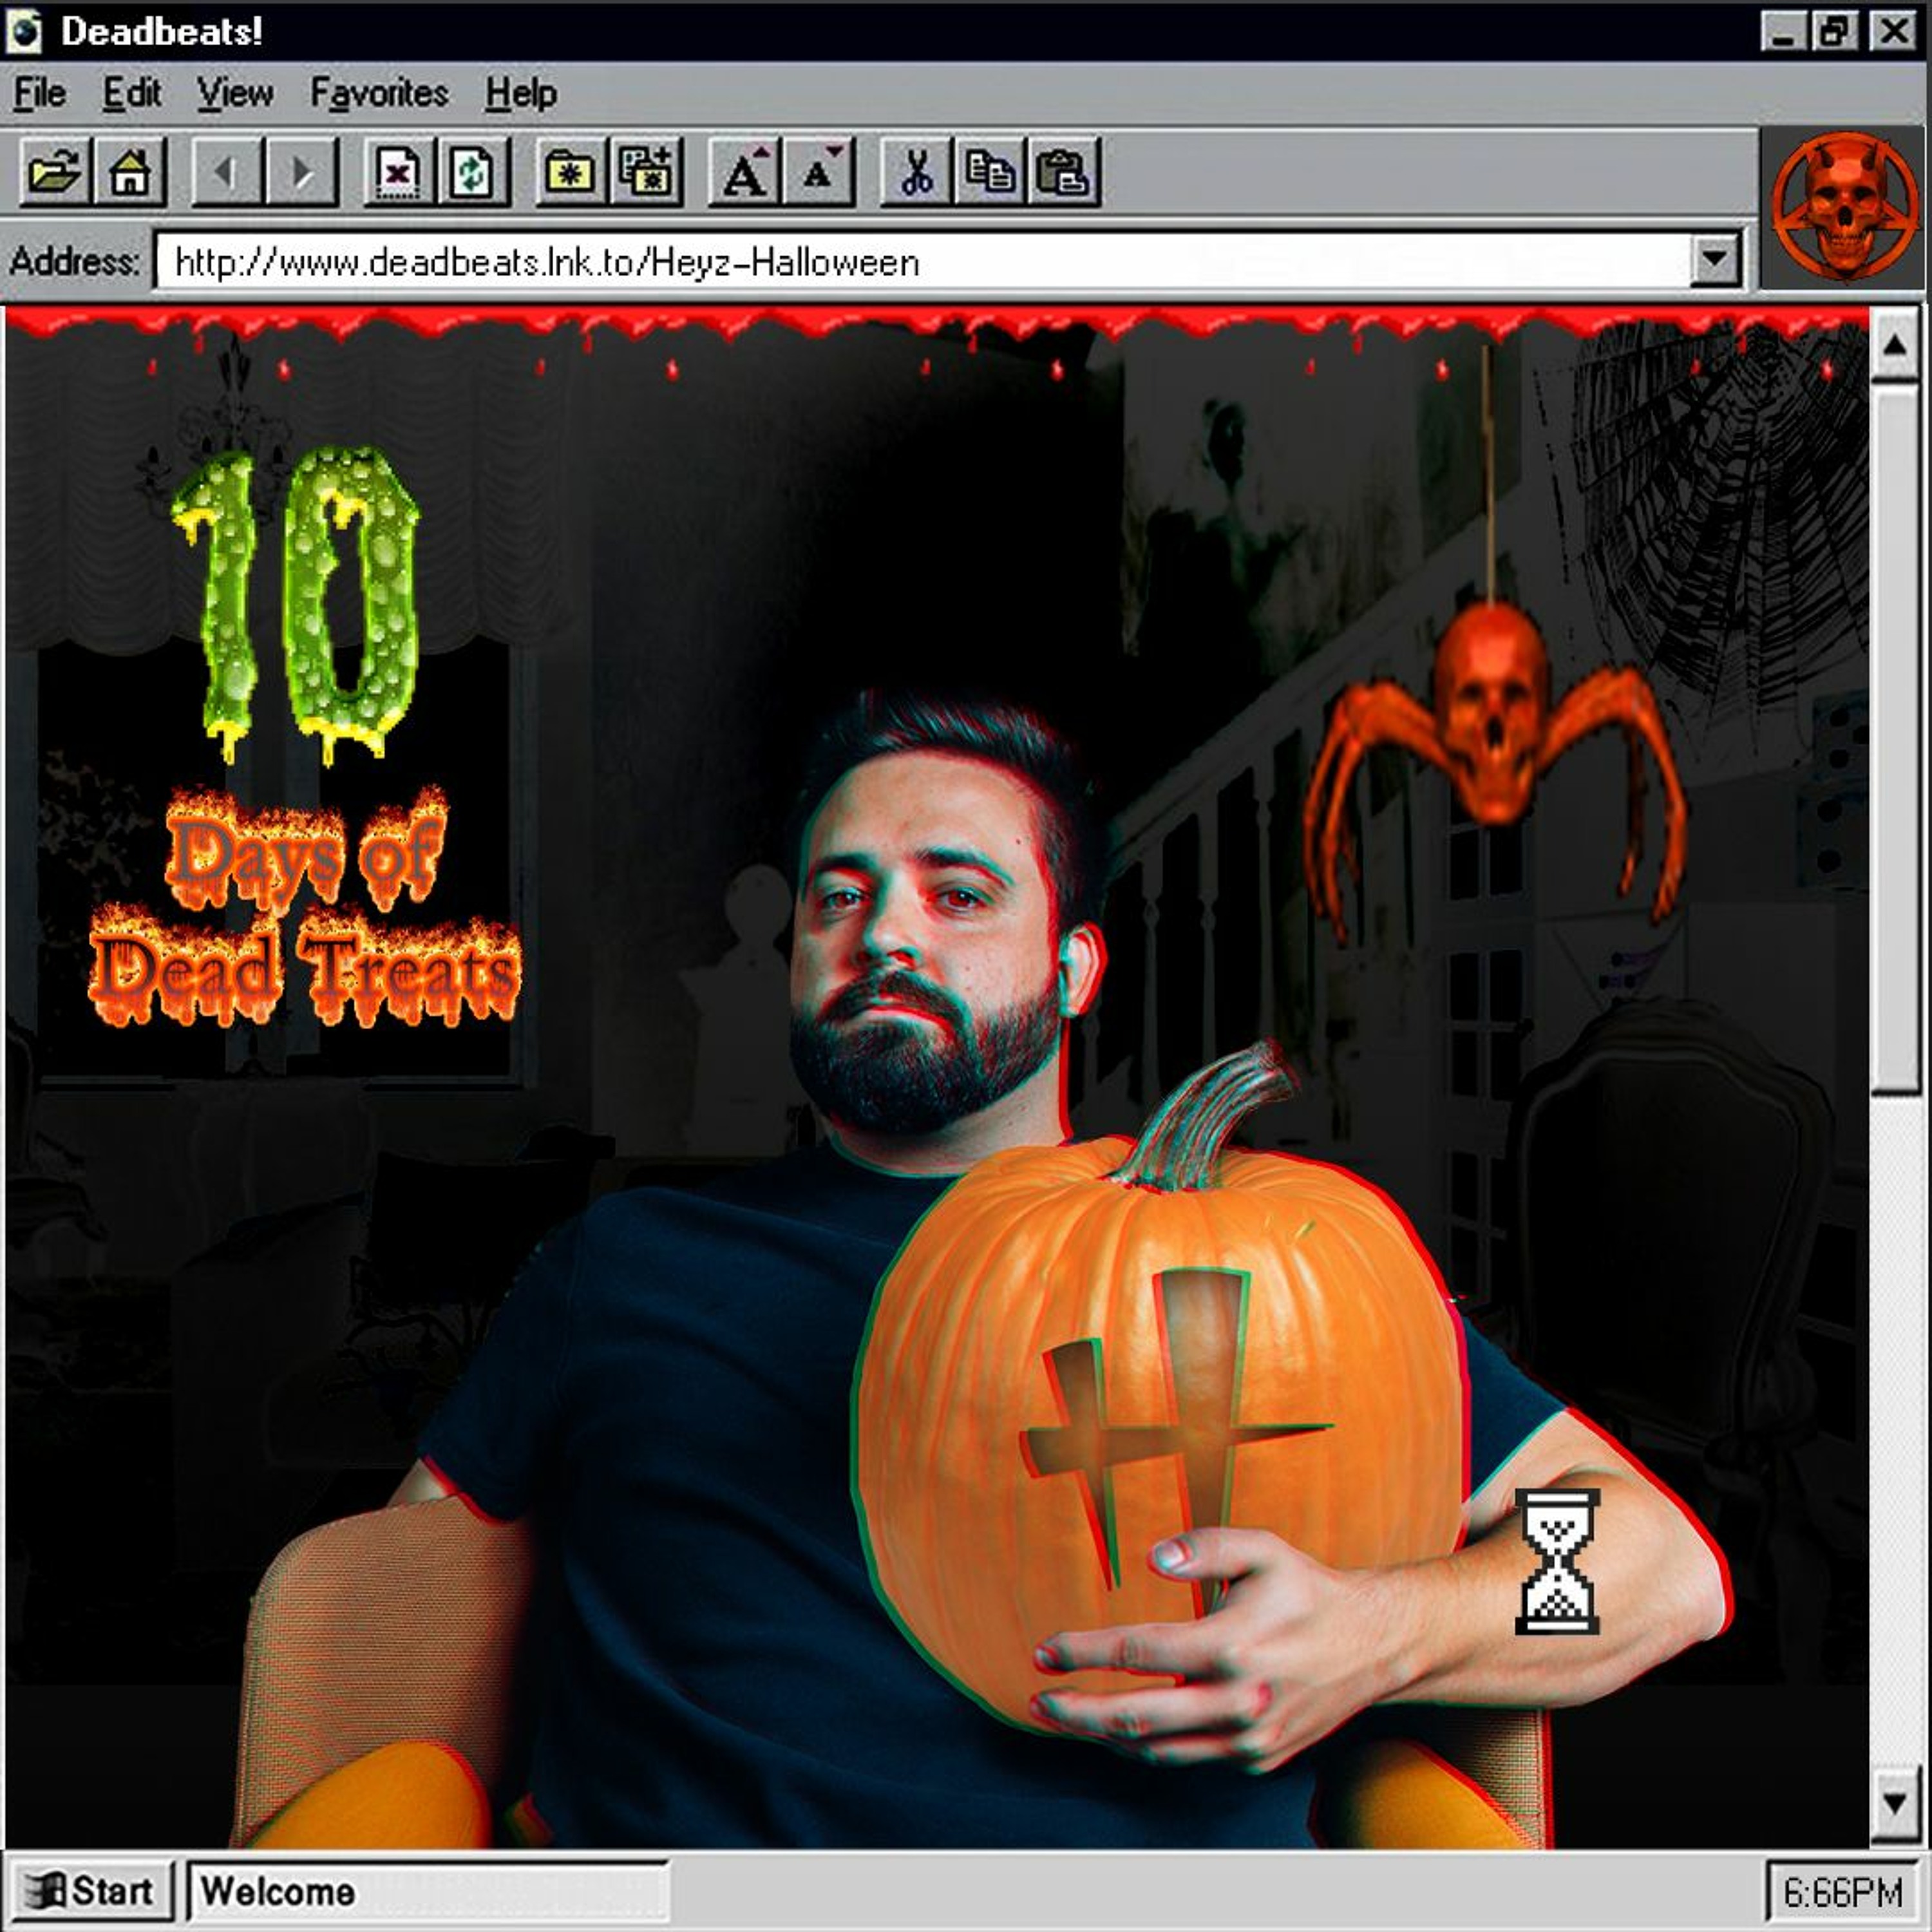 Heyz Halloween Mix | 10 Days of Dead Treats